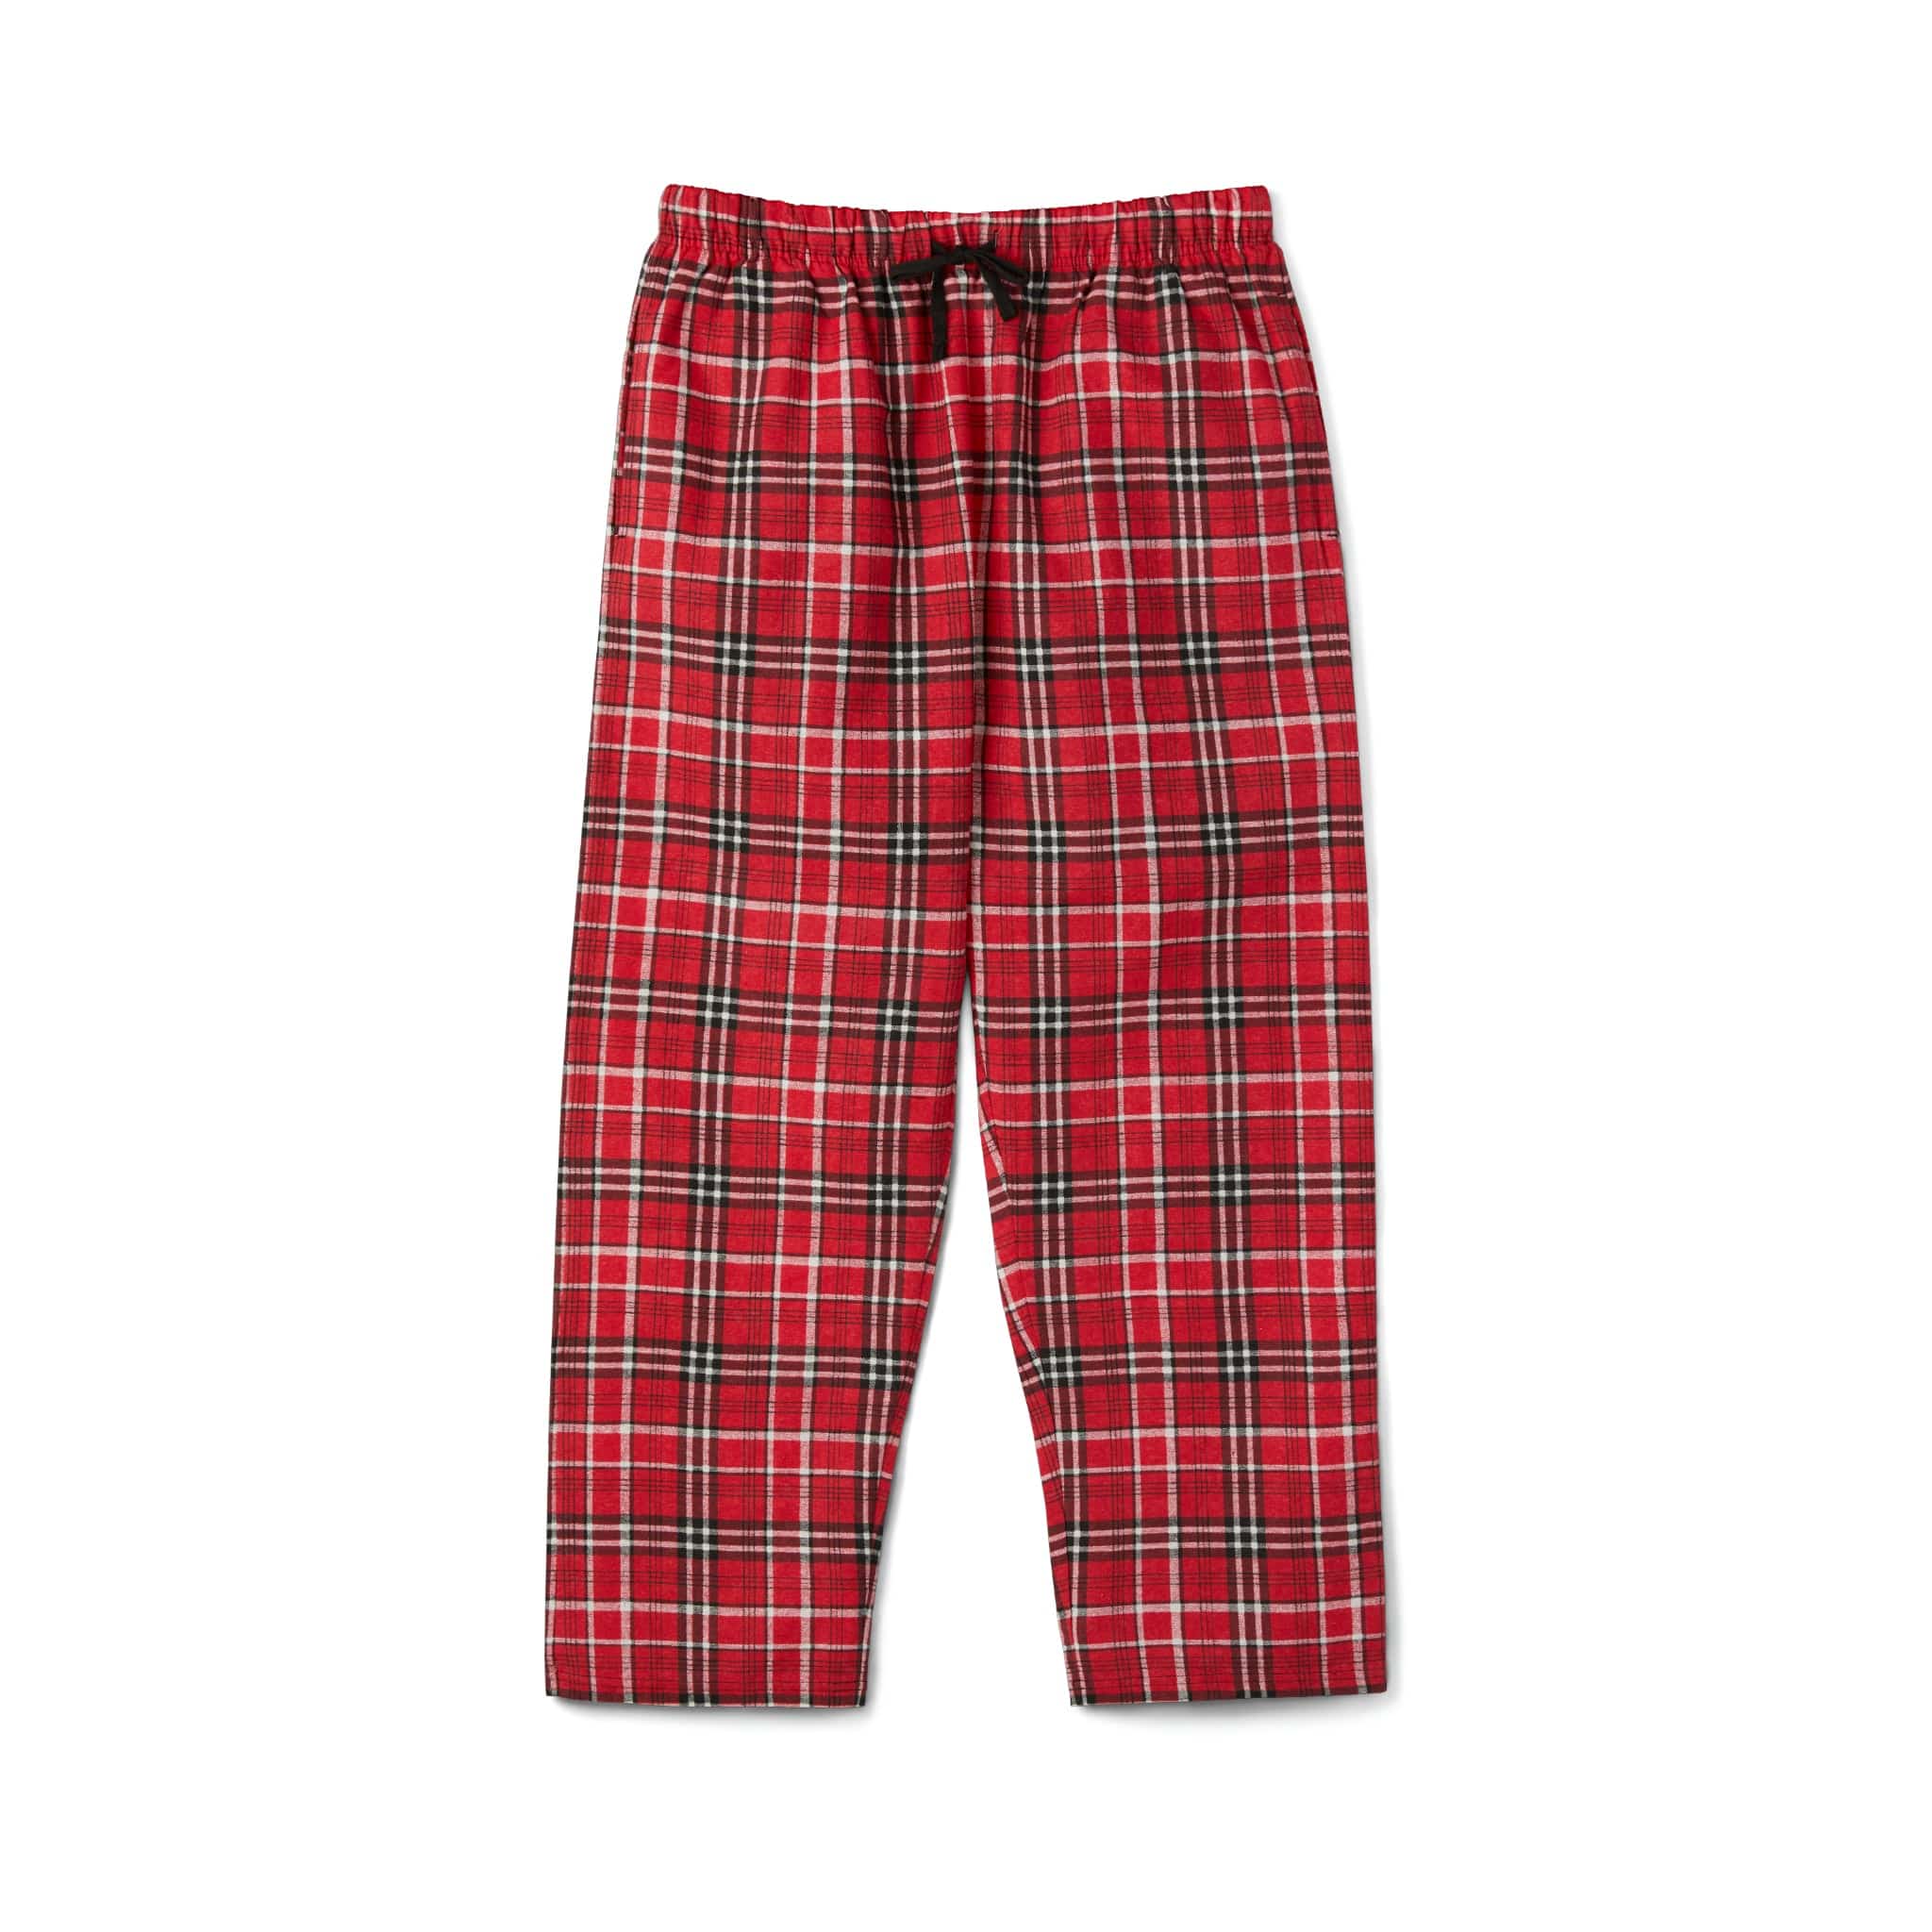 King Of Hearts Men's Short Sleeve Pajama Set